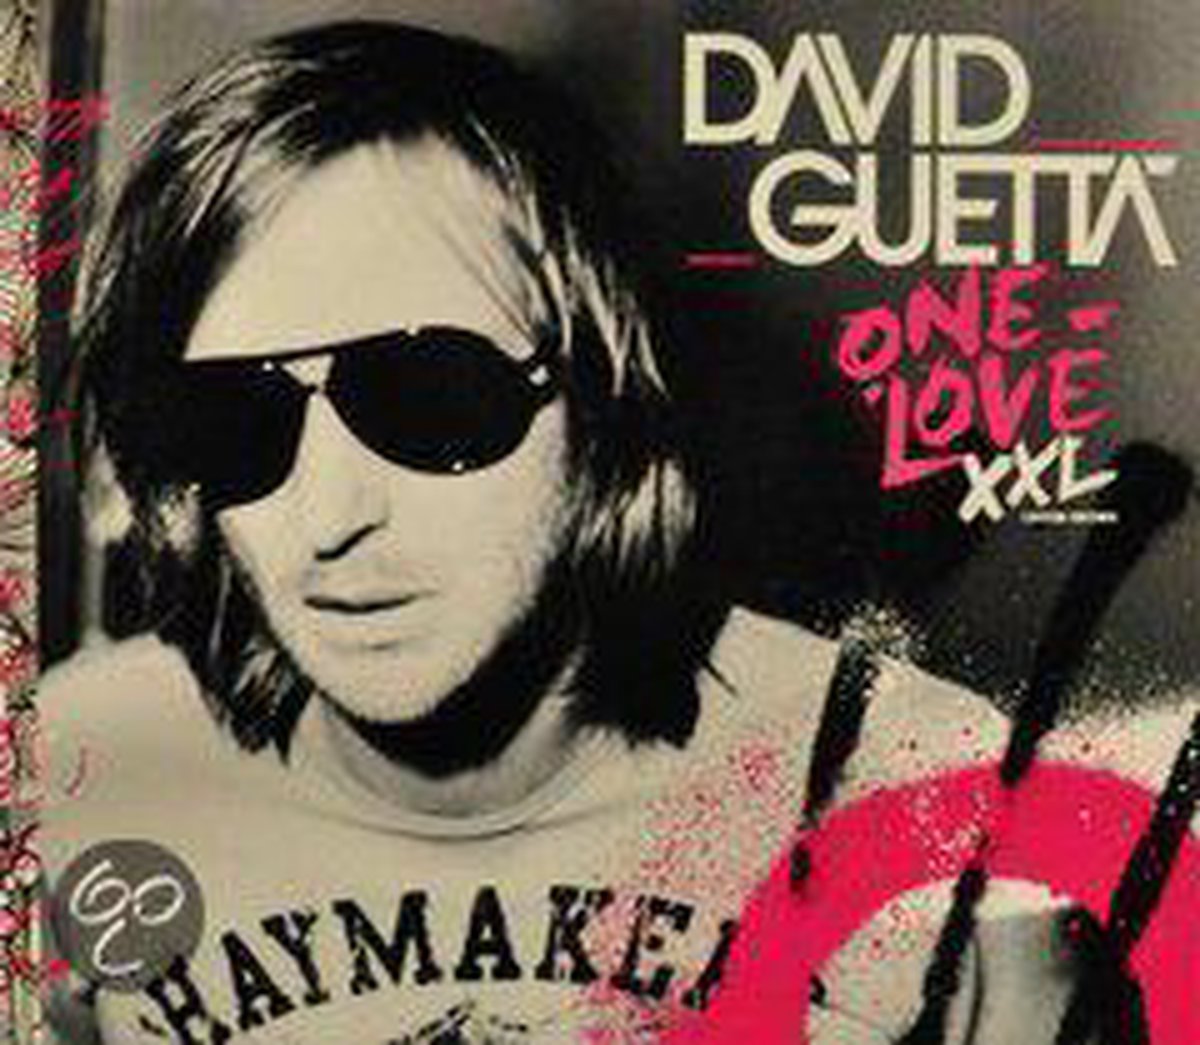 One Love XXL (Limited Edition) - David Guetta